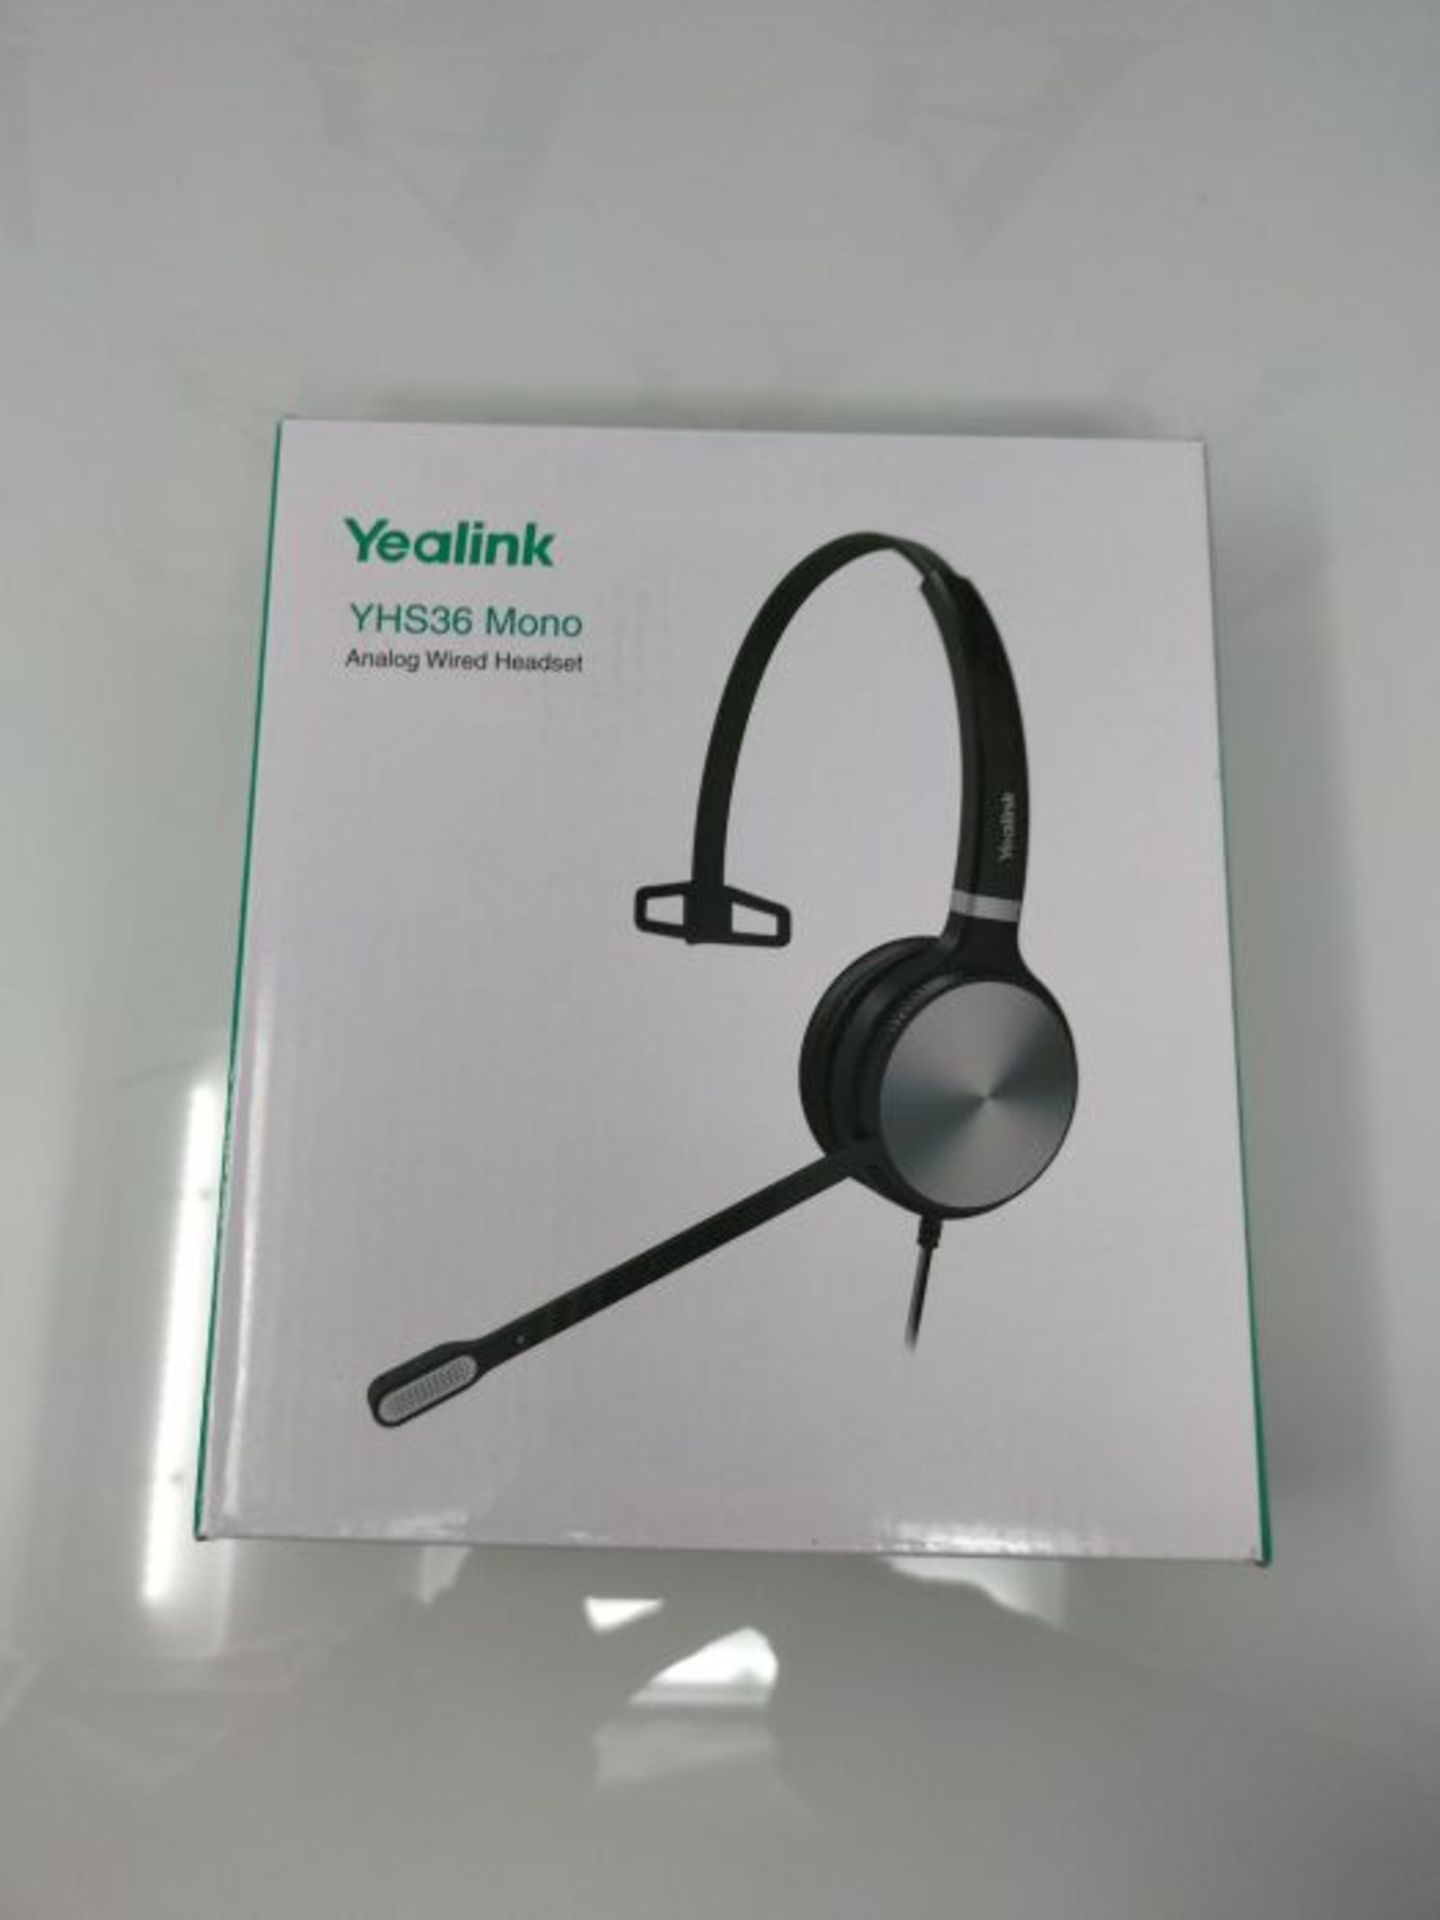 Yealink Headset YHS36 Mono - Image 2 of 3